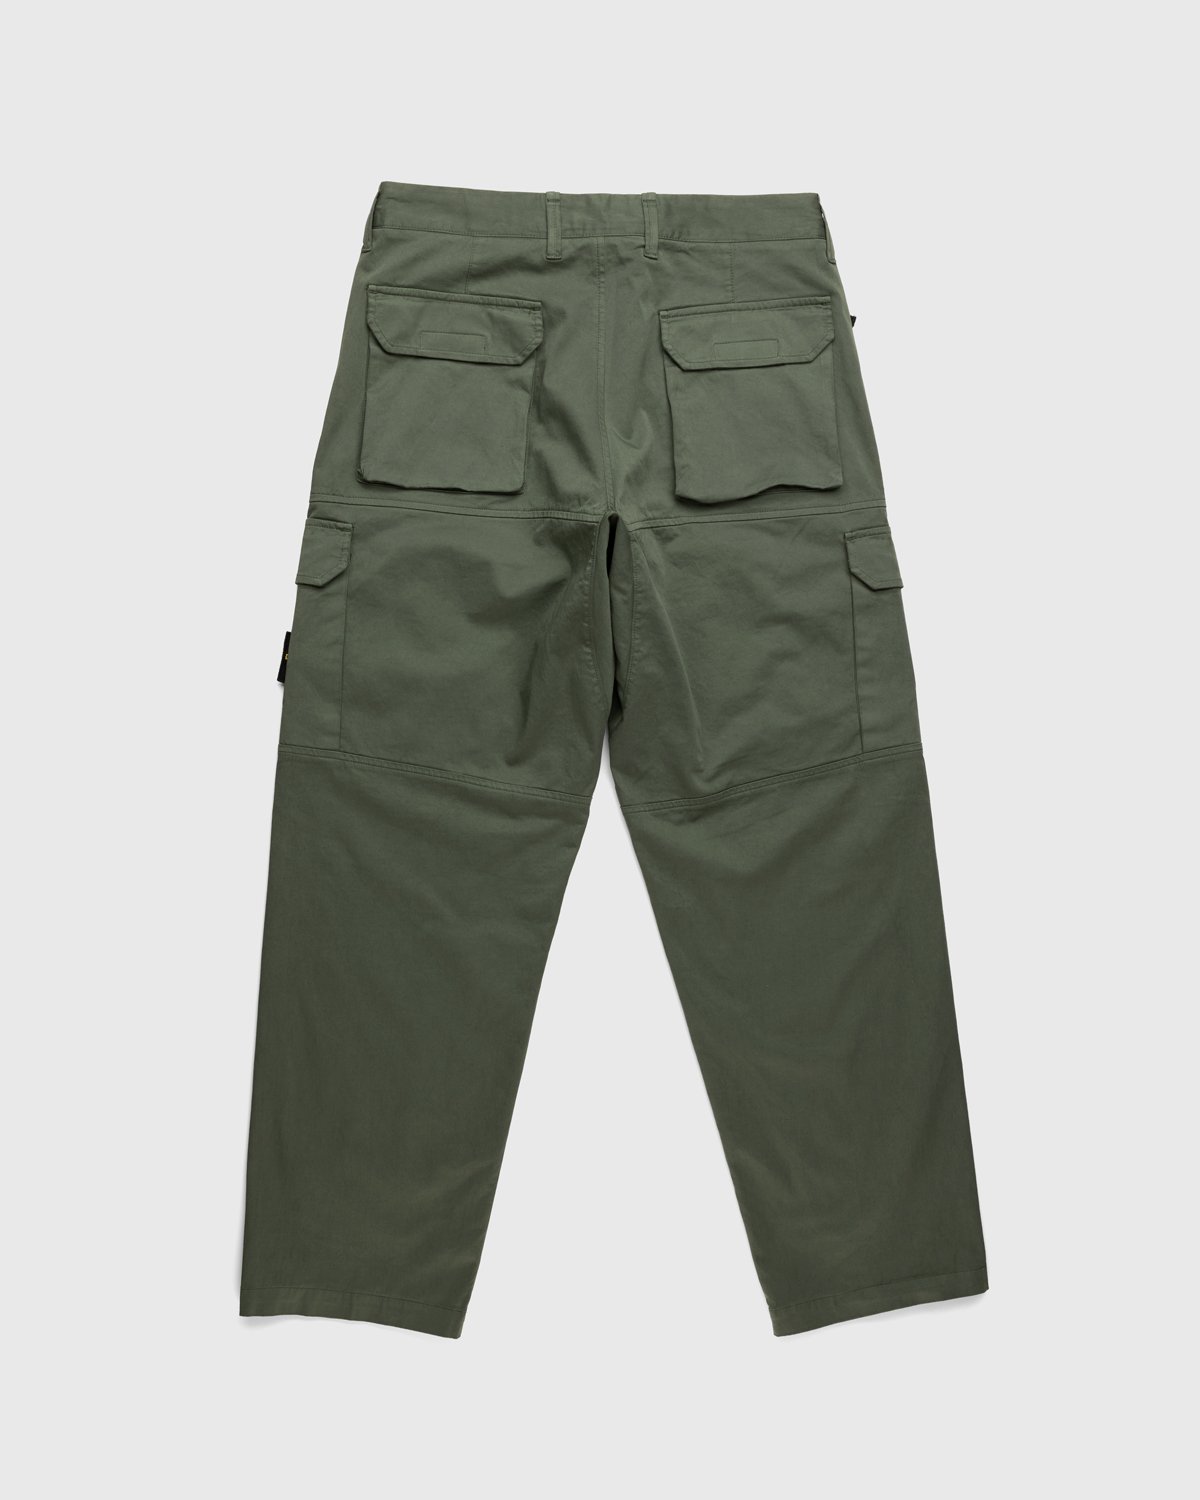 Stone Island - Pants Green - Clothing - Green - Image 2